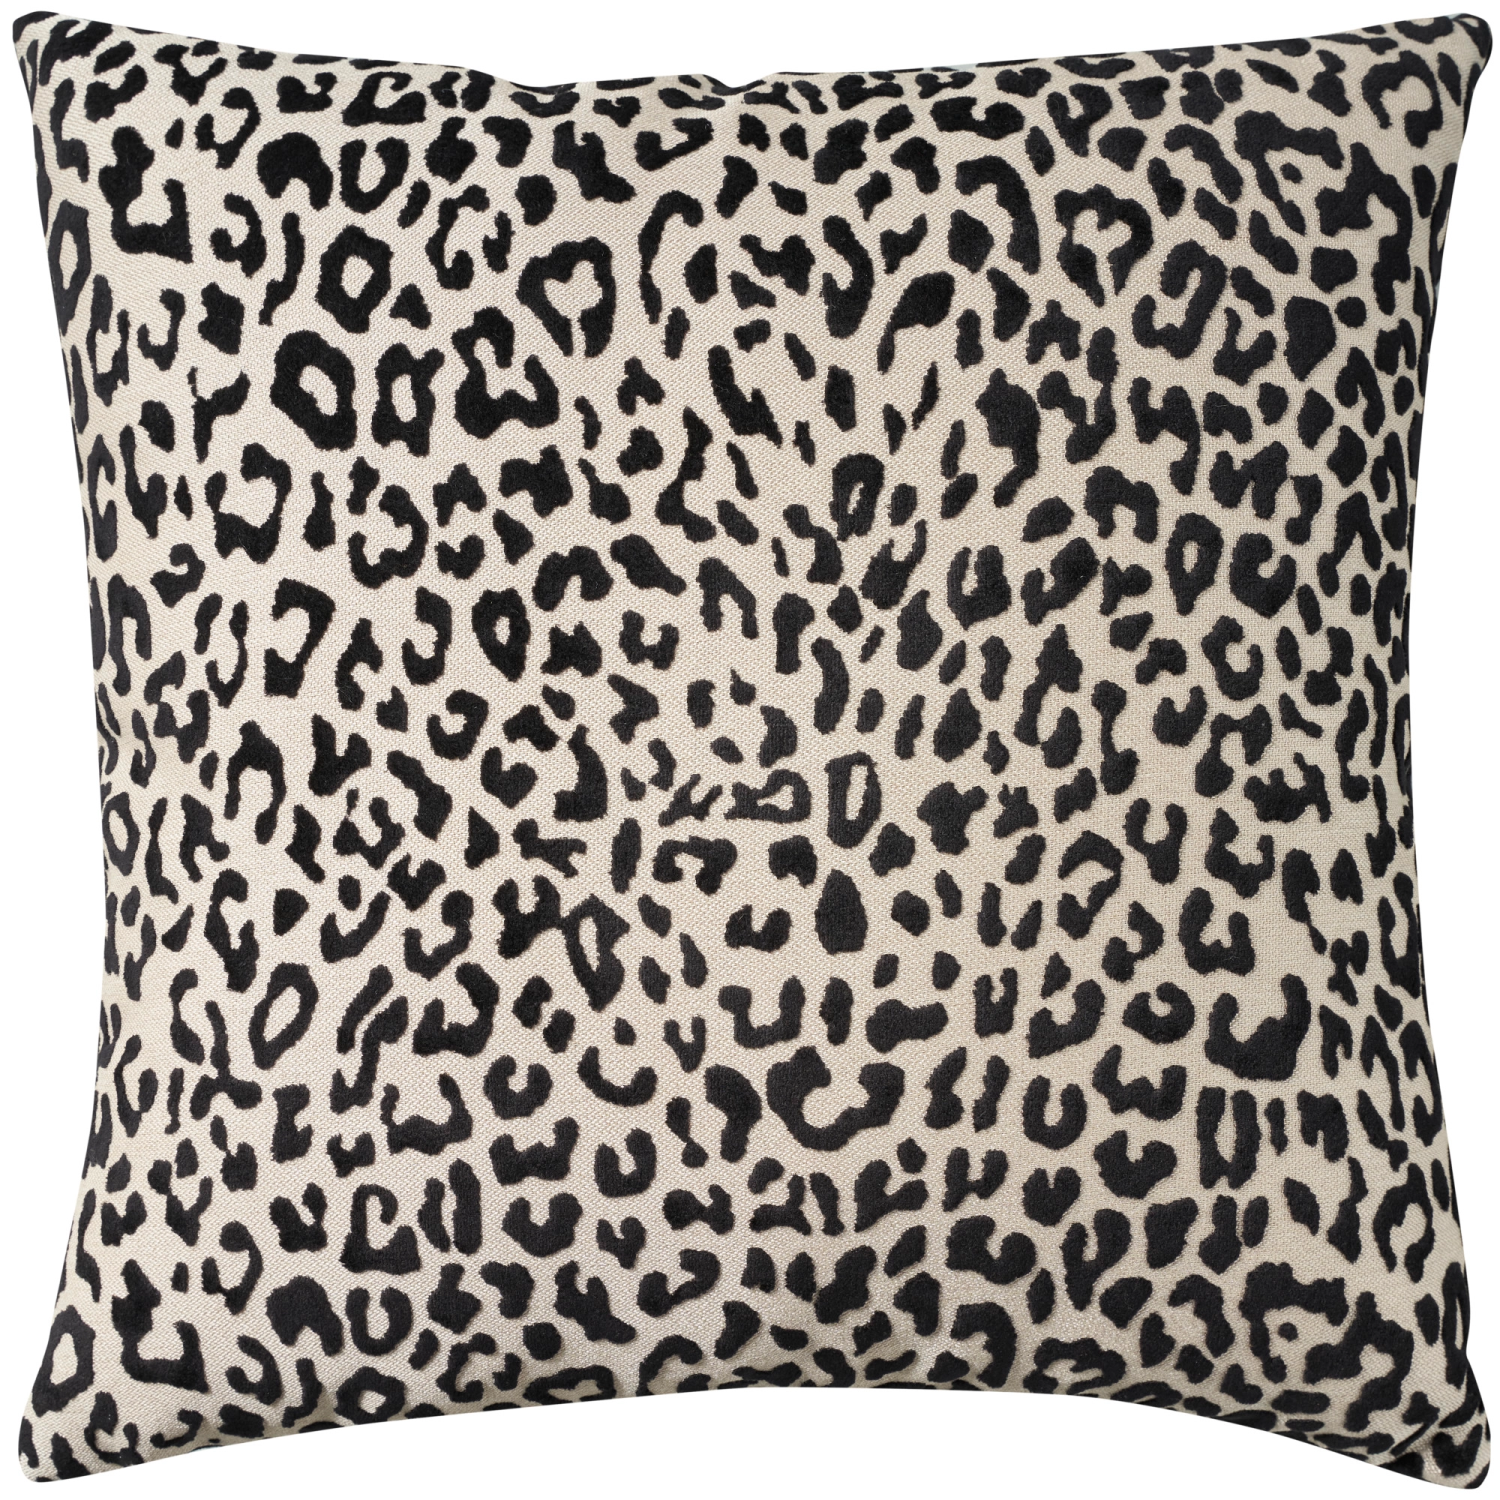 Sofia Accent Pillow Leopard Face Fabric Image